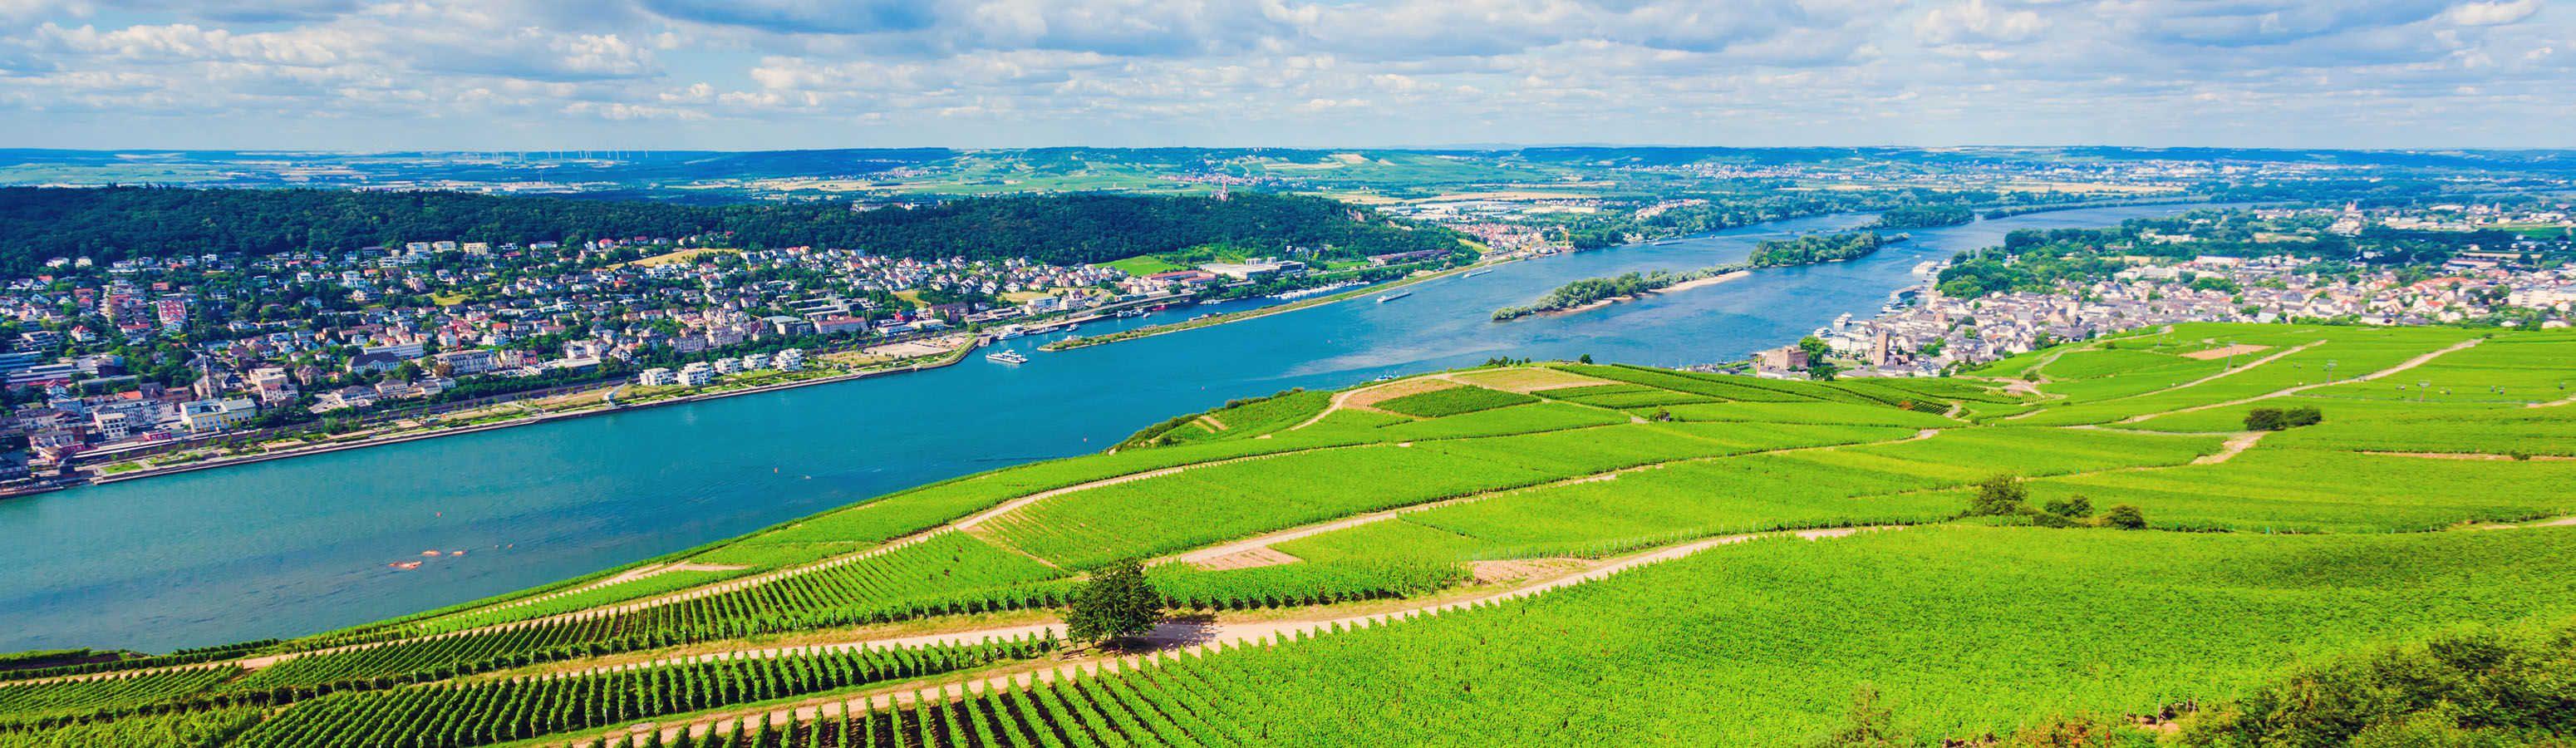 Rüdesheim adornment on the Rhine